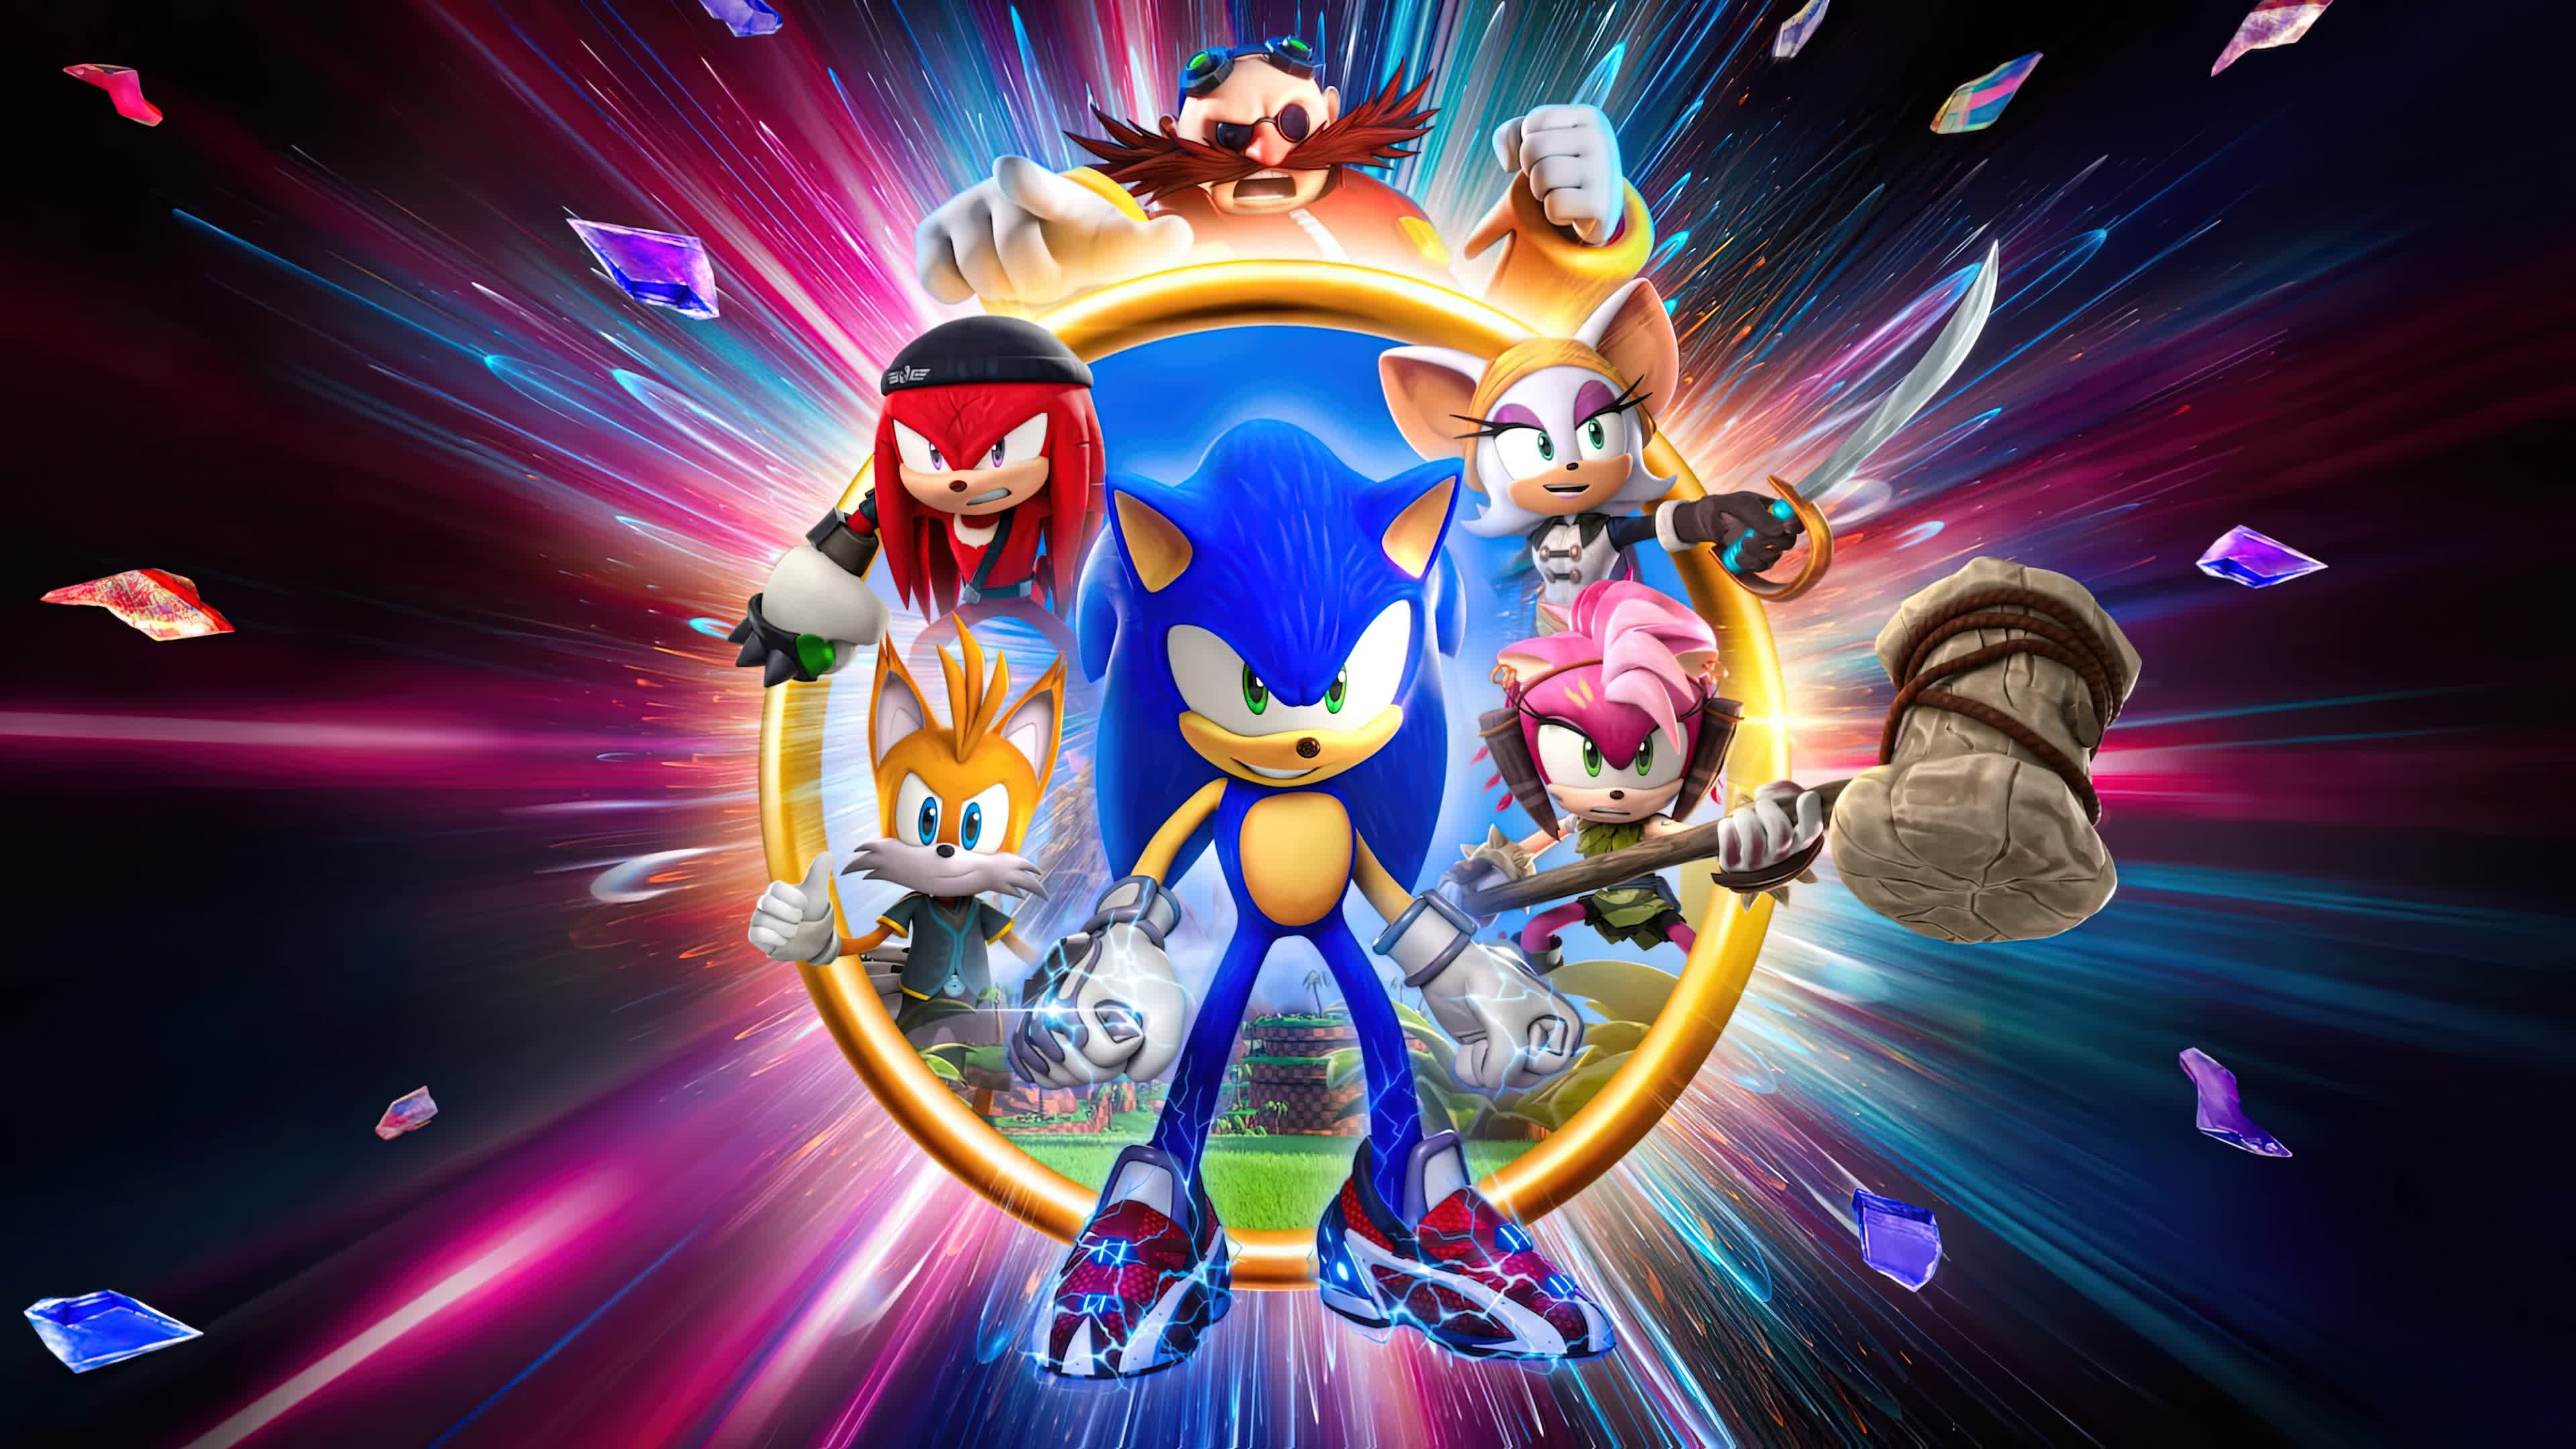 Sonic Prime Season 3 (2024) โซนิค ไพรม์